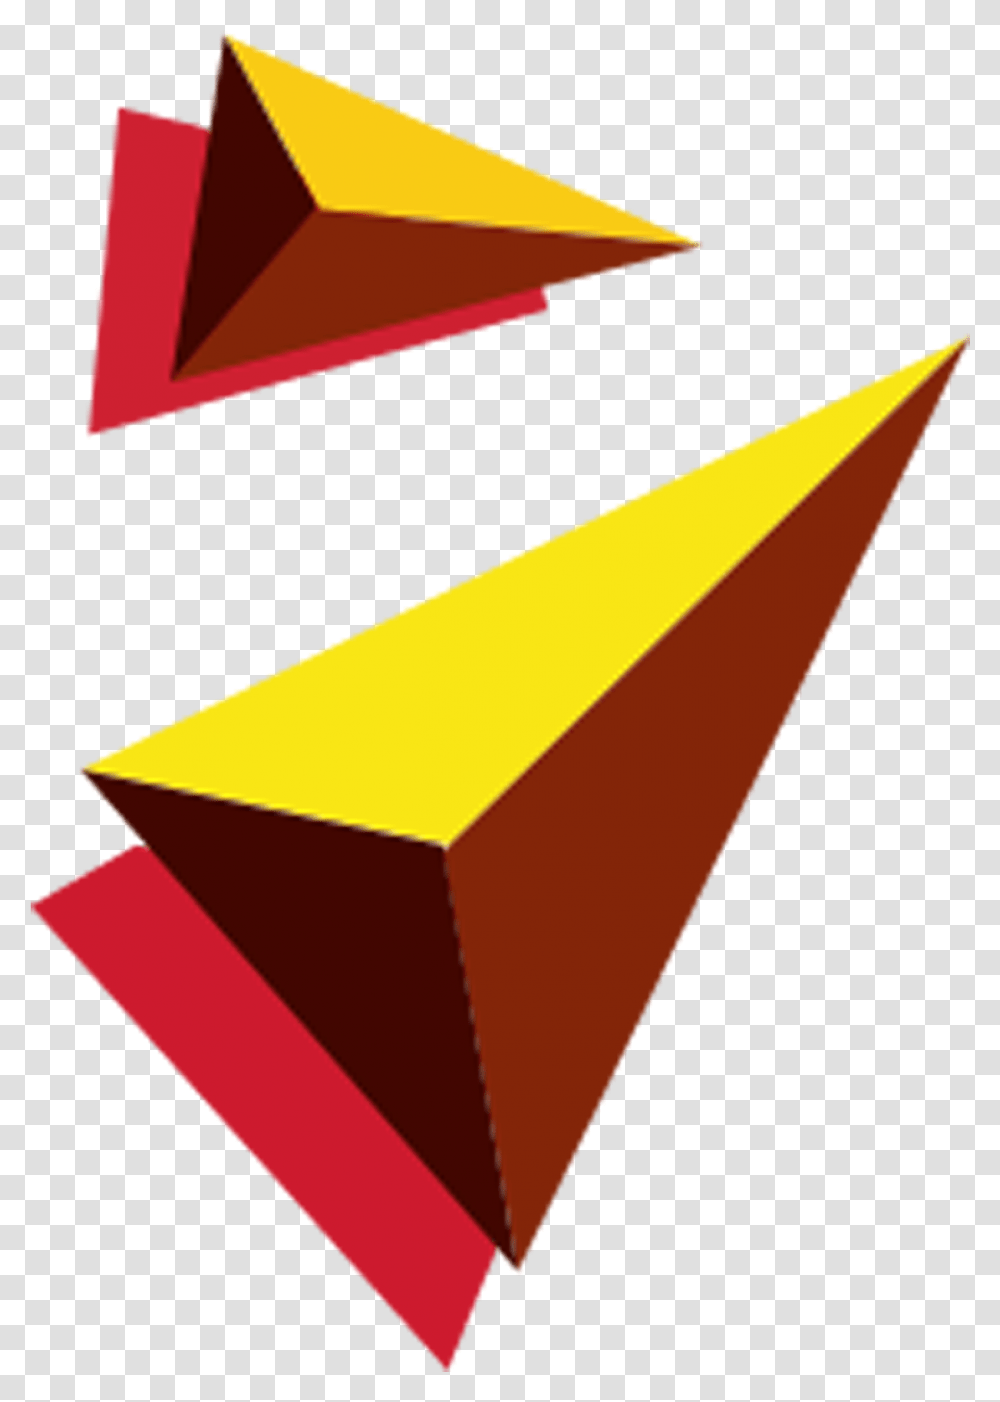 3d Geometric Shapes 3d Geometric Shape Art, Triangle, Lighting, Wedge Transparent Png